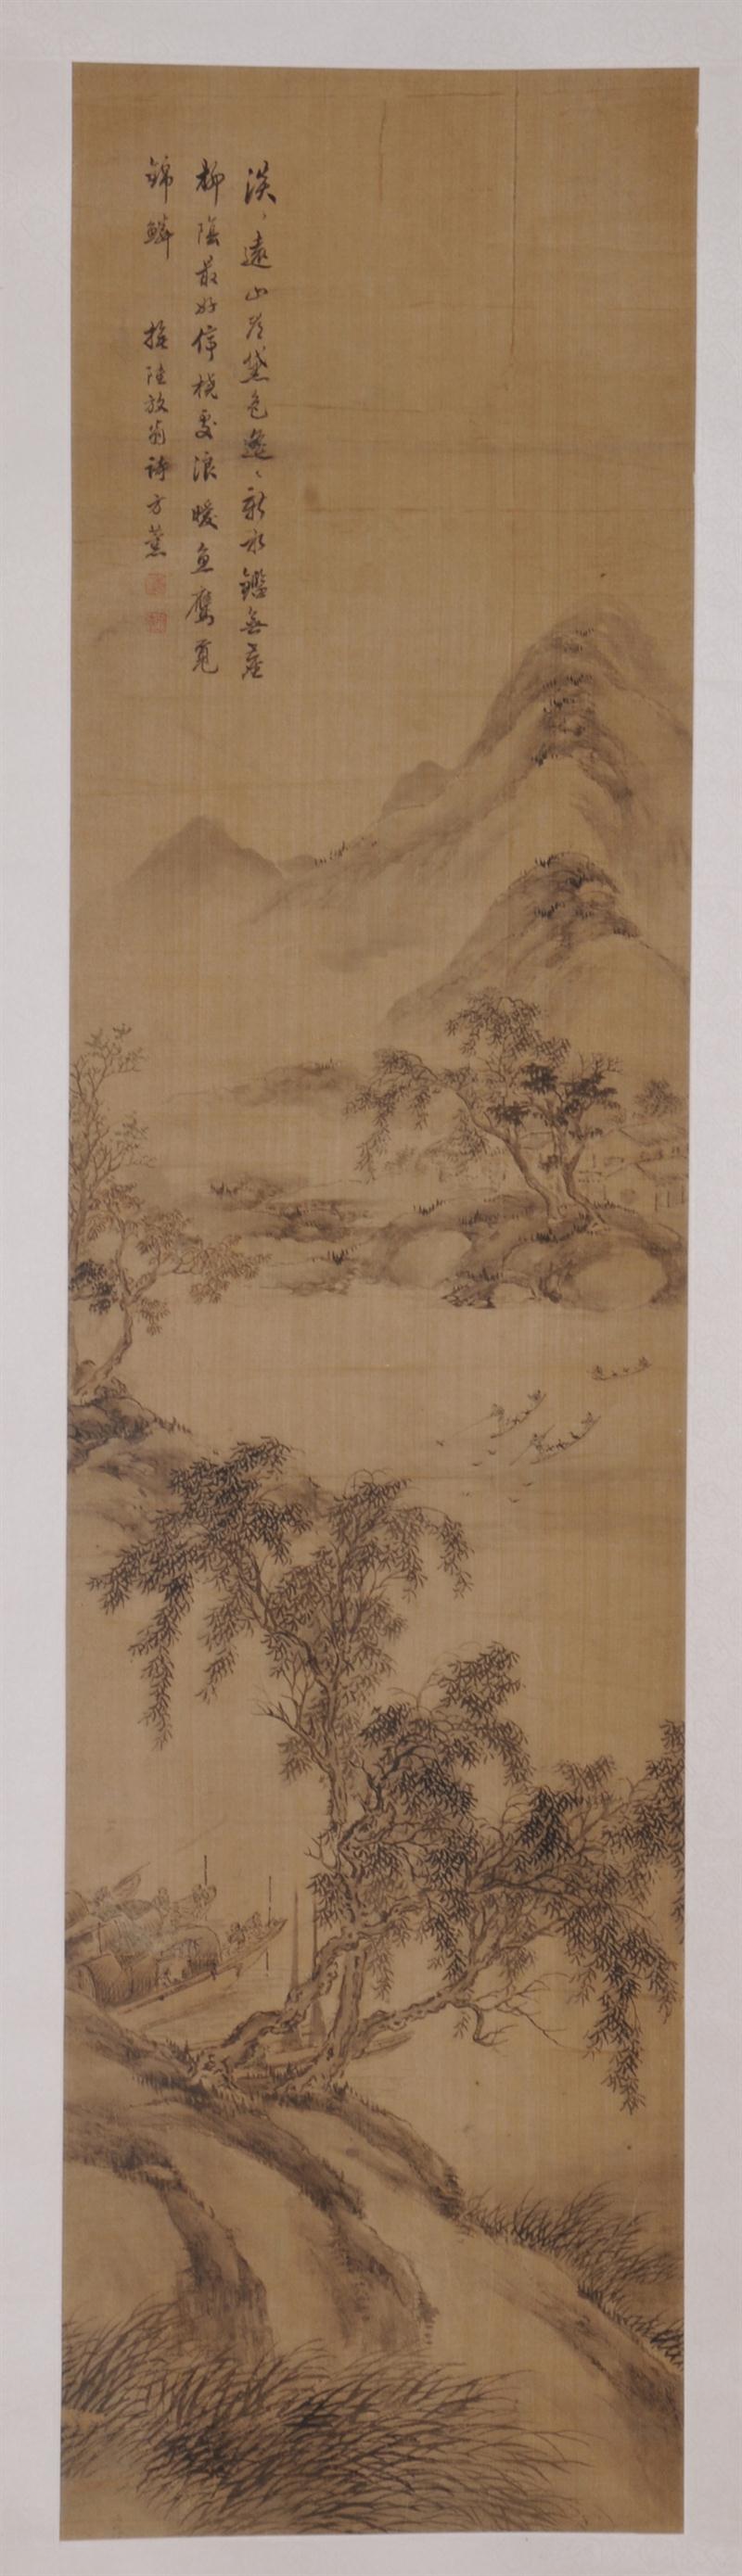 FANG XUN (CHINESE 1736-1799): RIVERSCAPE